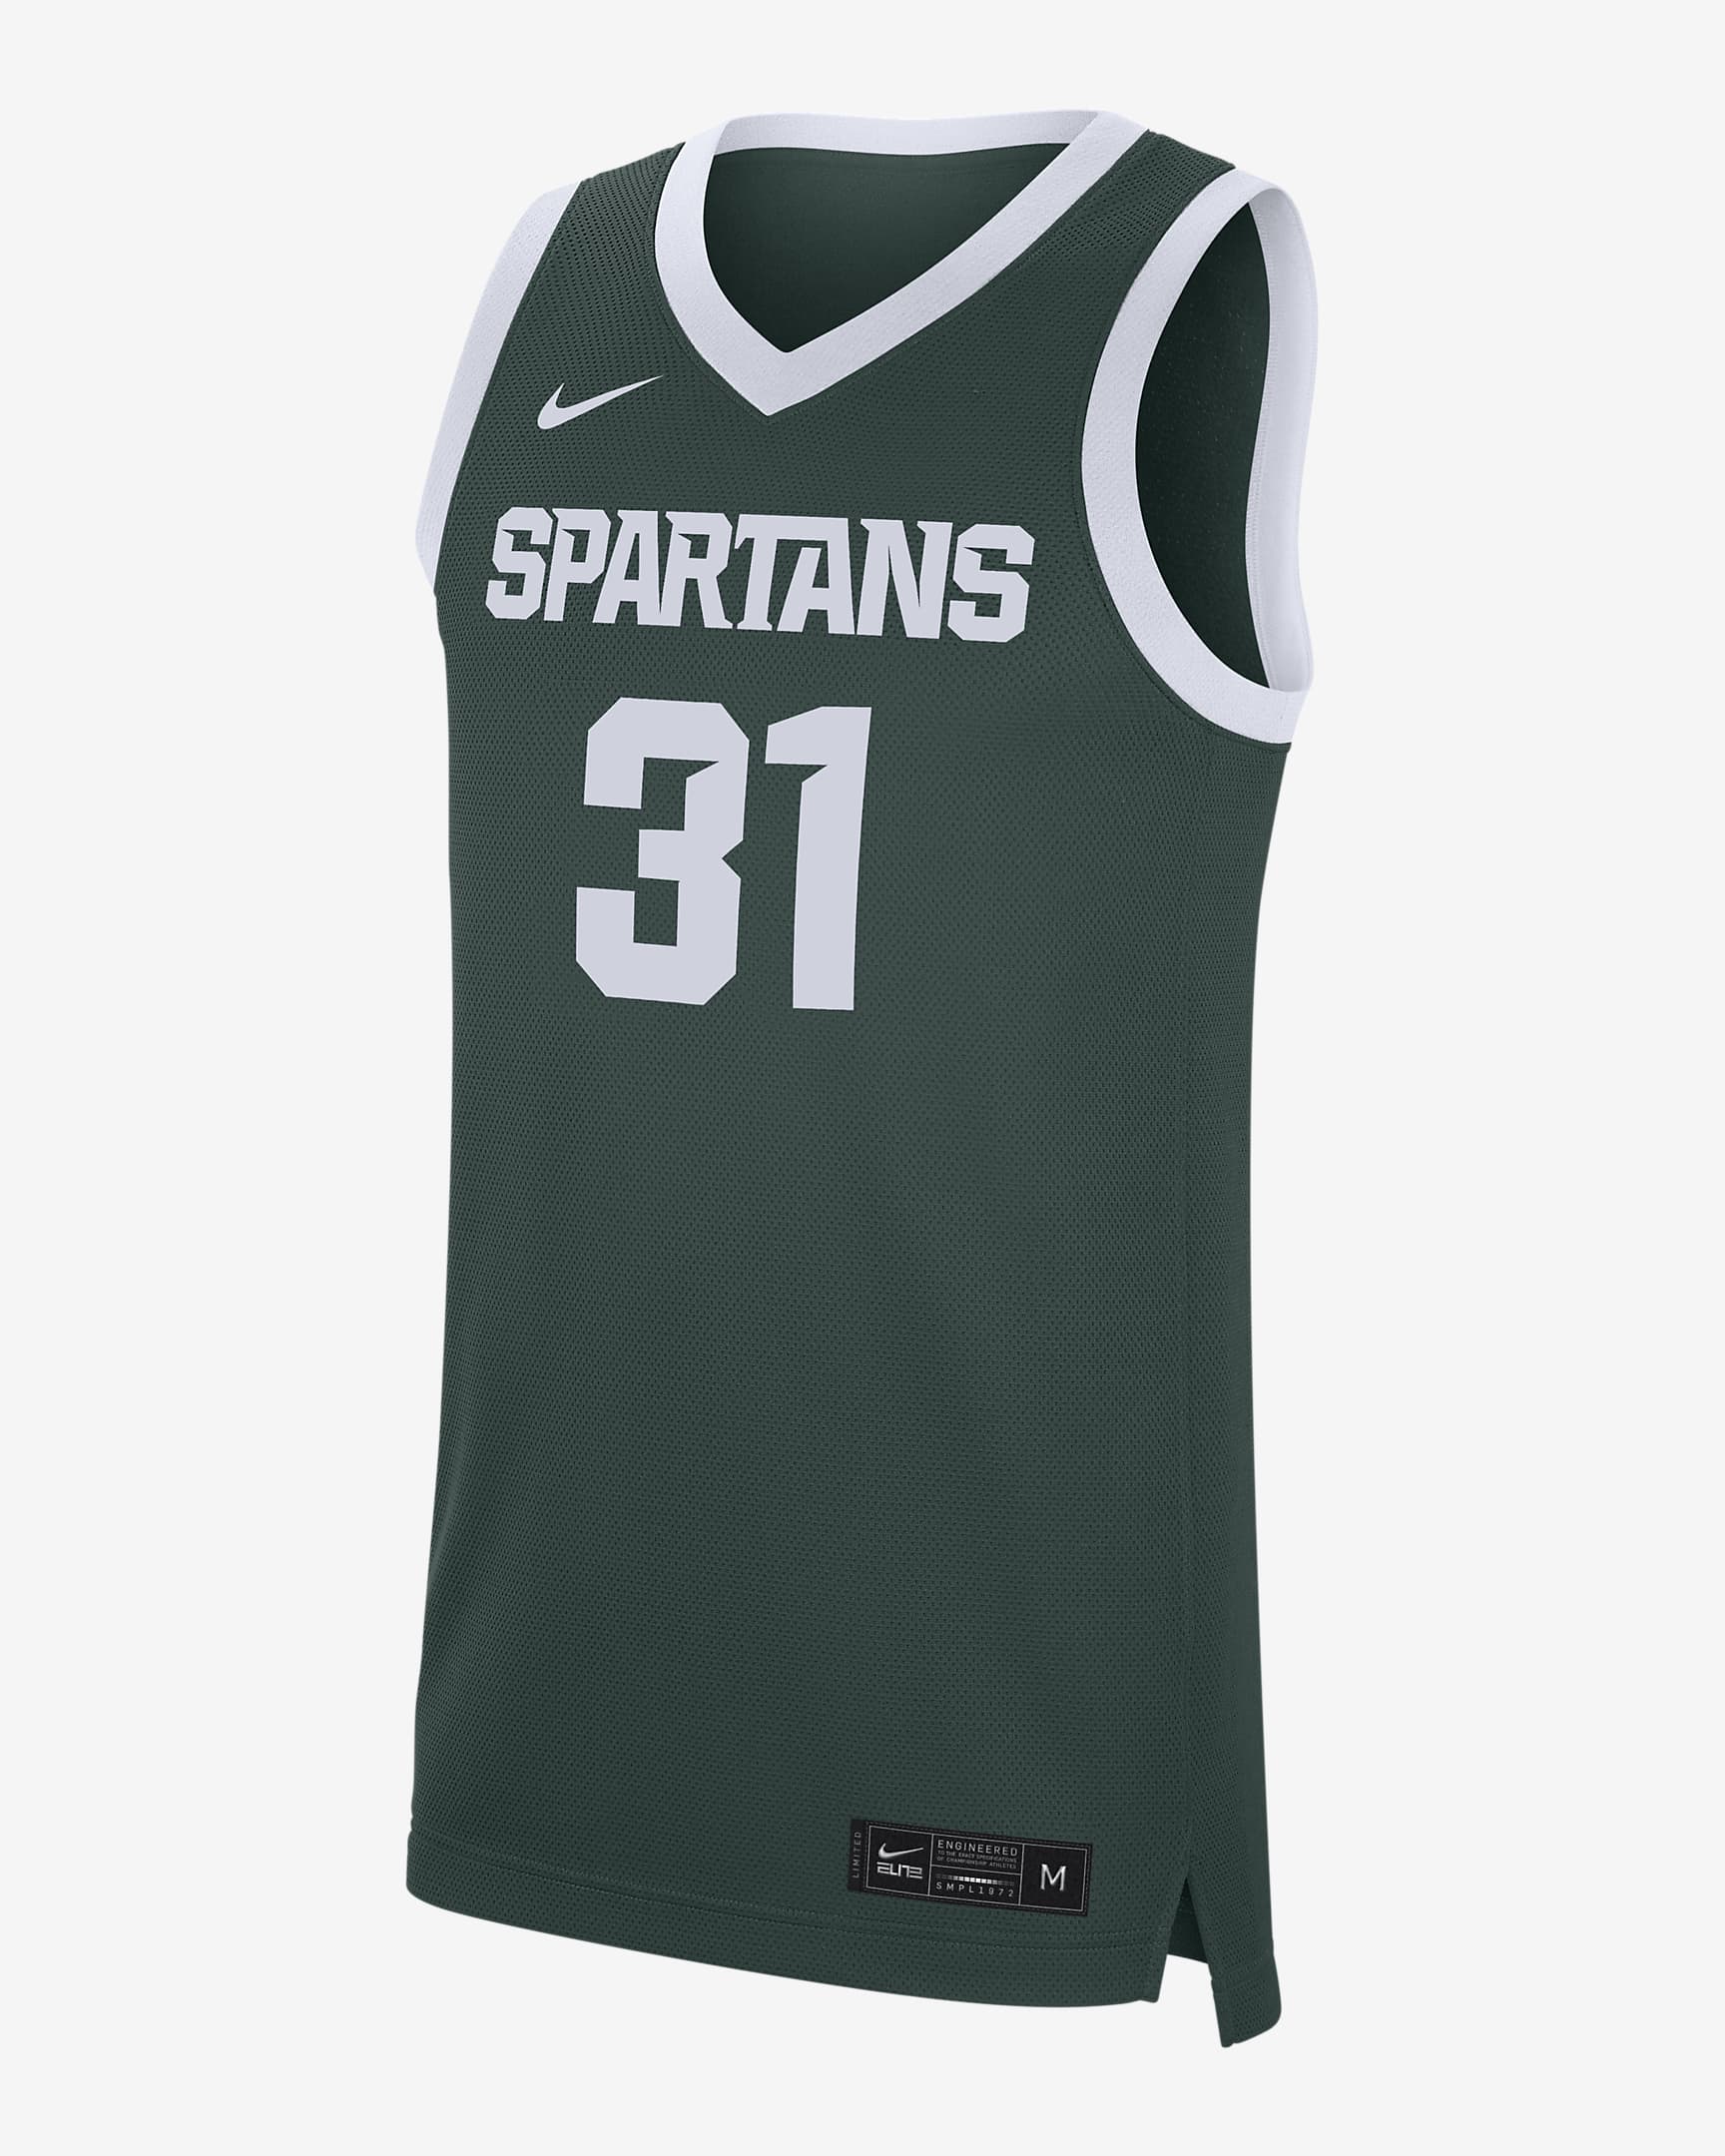 New hoops jerseys Replica-michigan-state-mens-basketball-jersey-7Q7kwS